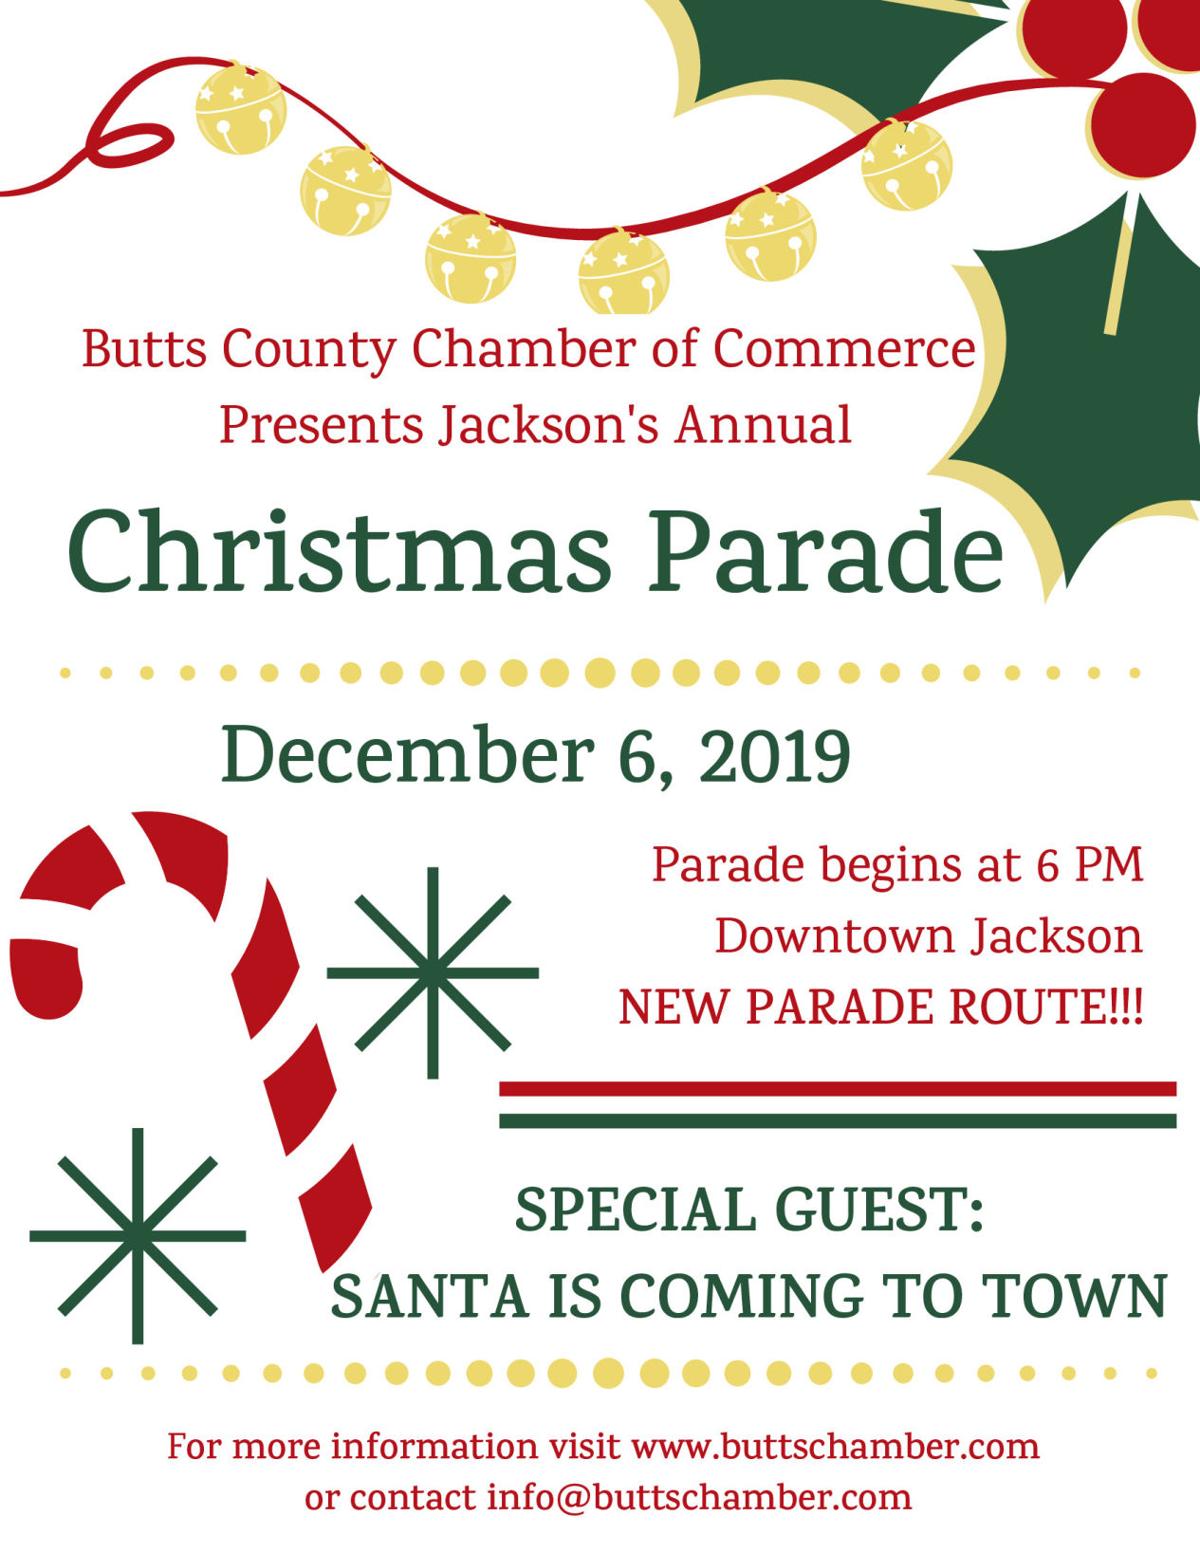 Jackson Christmas Parade set for this Friday News jacksonprogress